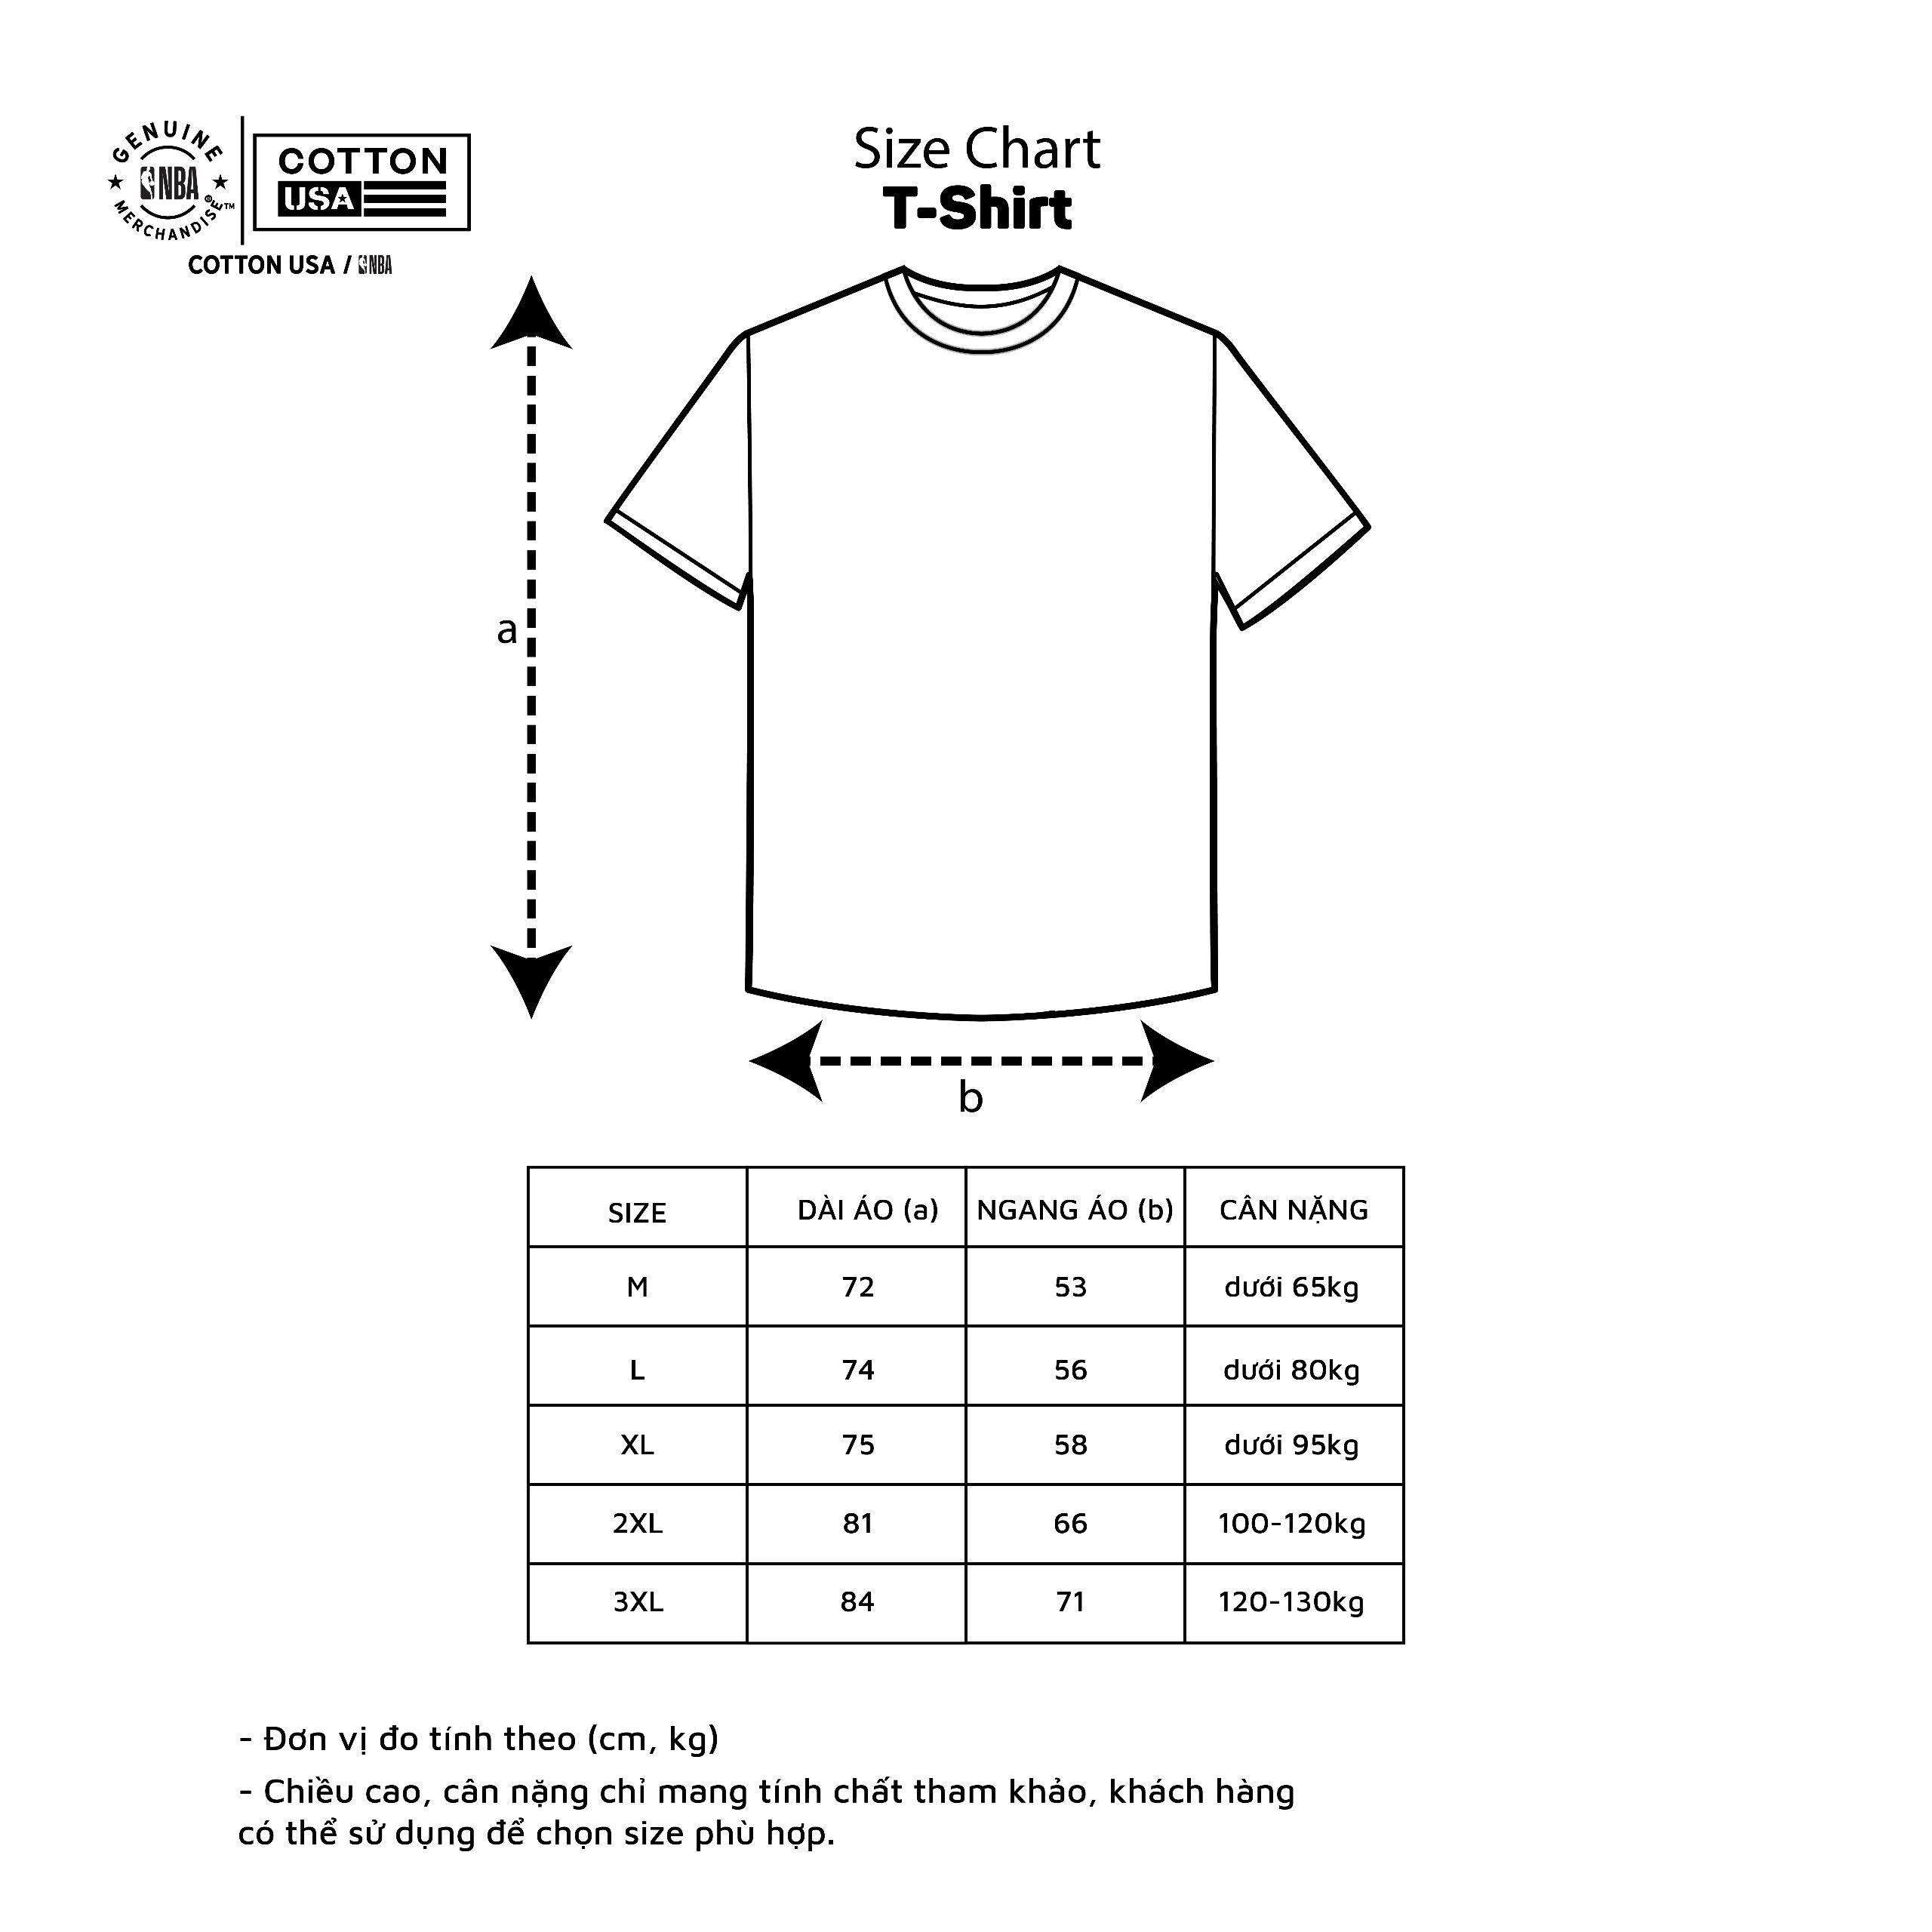 NBA New York Knicks Alpha Industries Striped T-Shirt